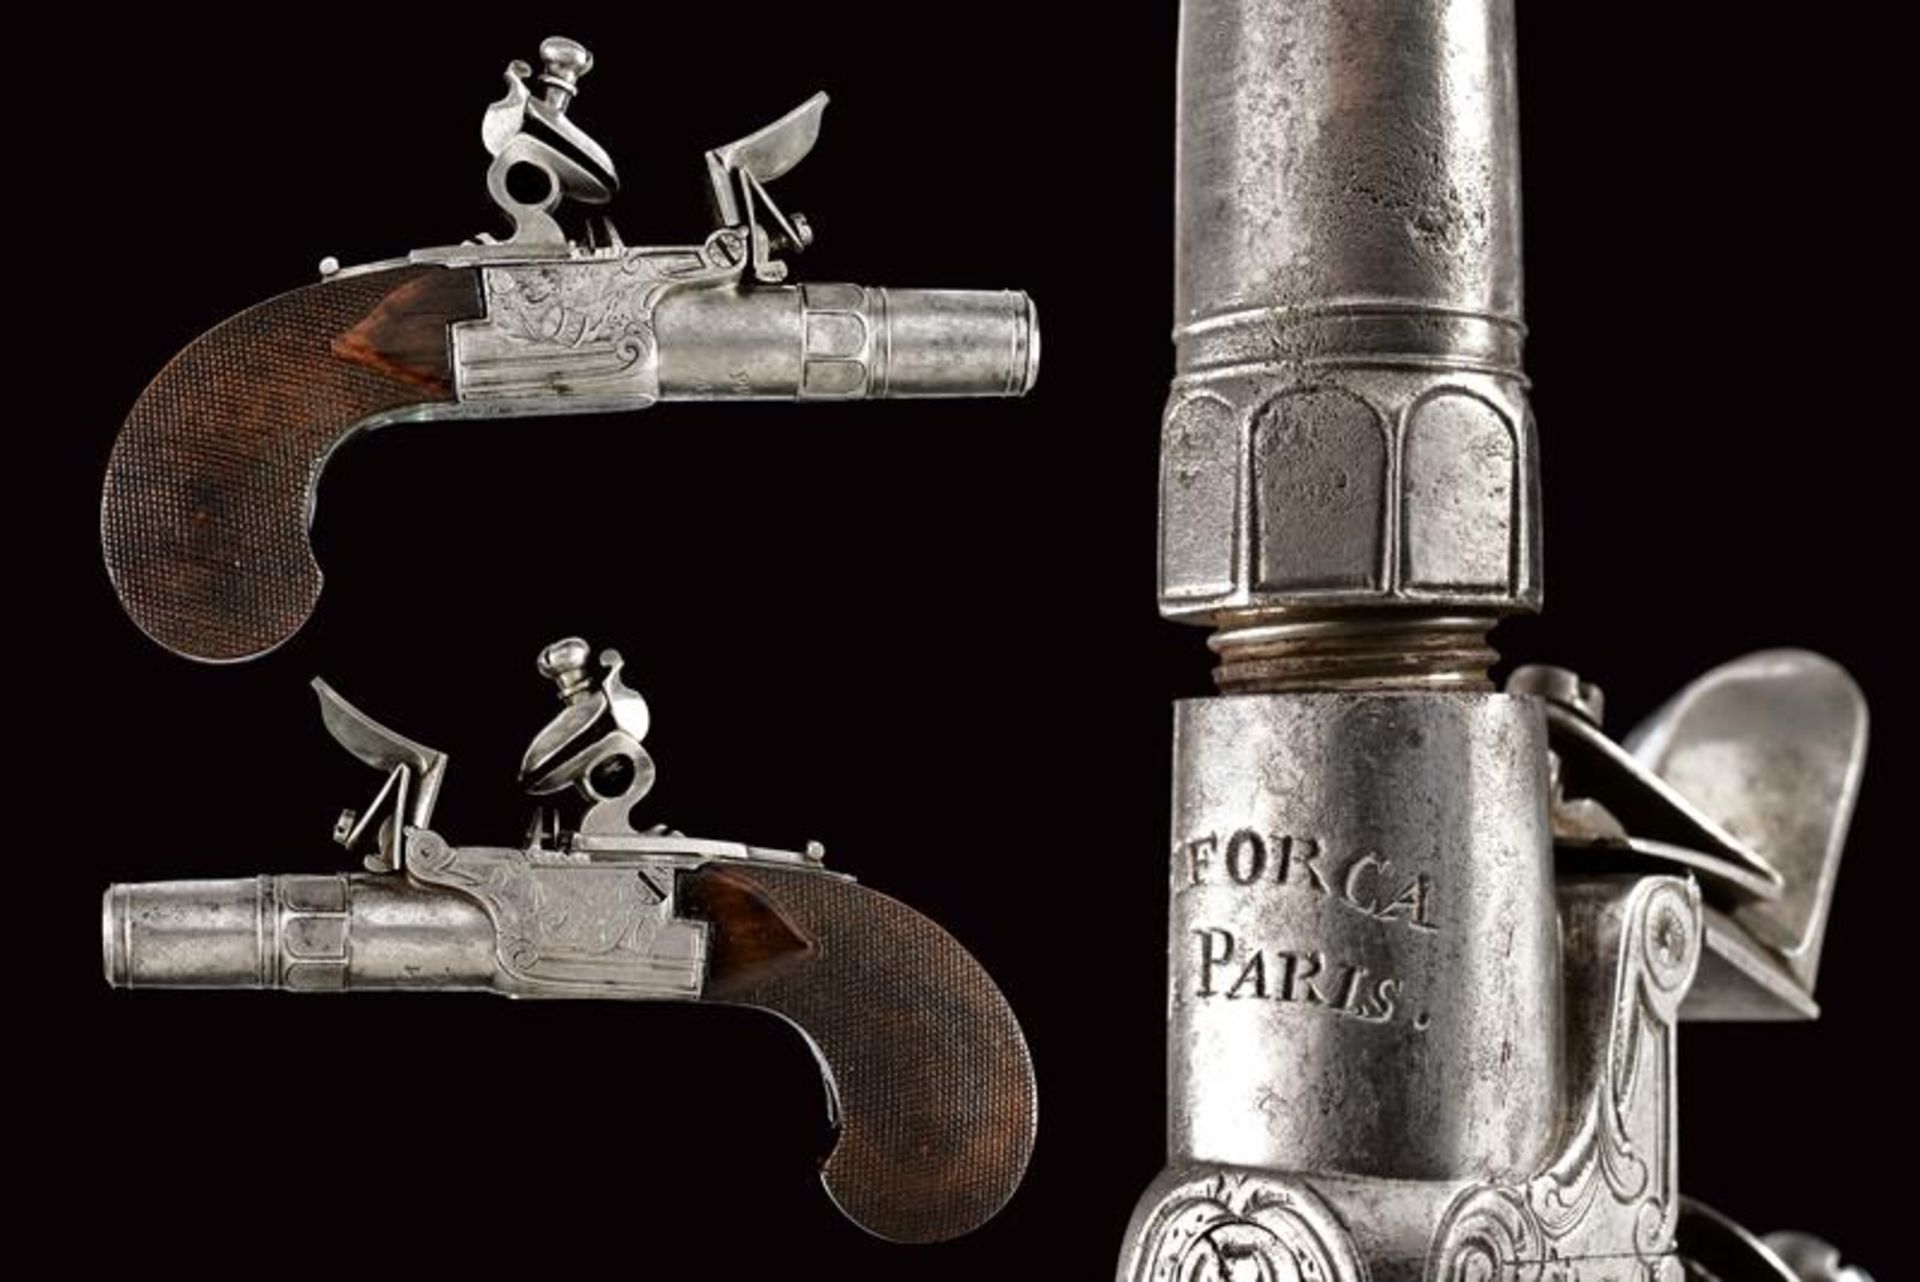 A pair of flintlock pocket pistols by Piforca